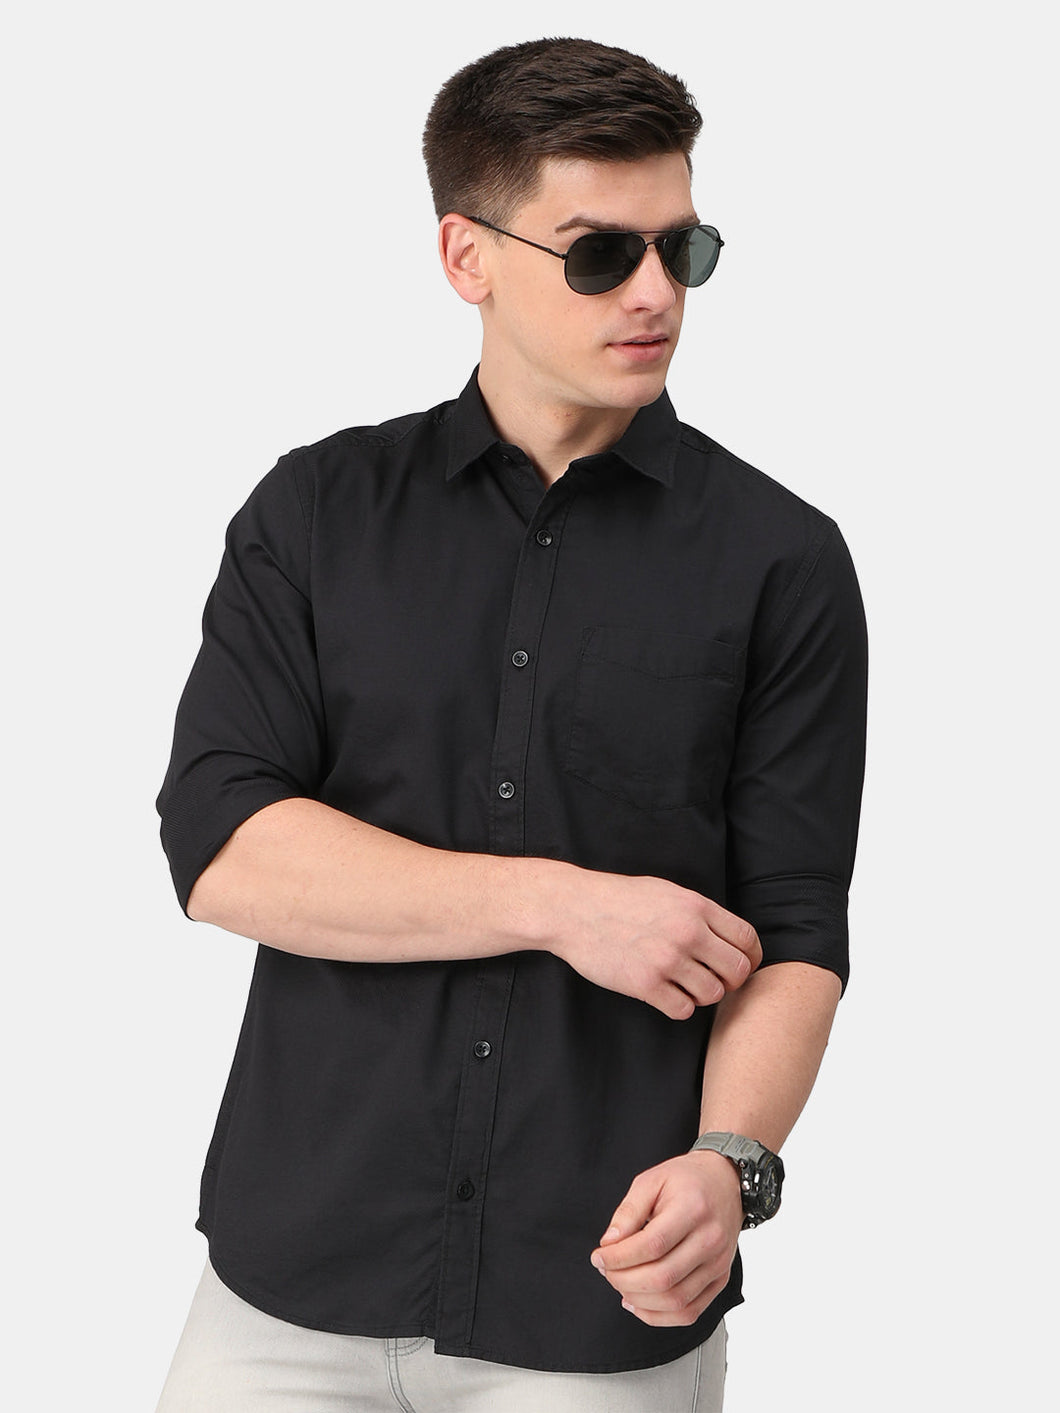 Black Oxford Solid Shirt Shirt www.epysode.in 